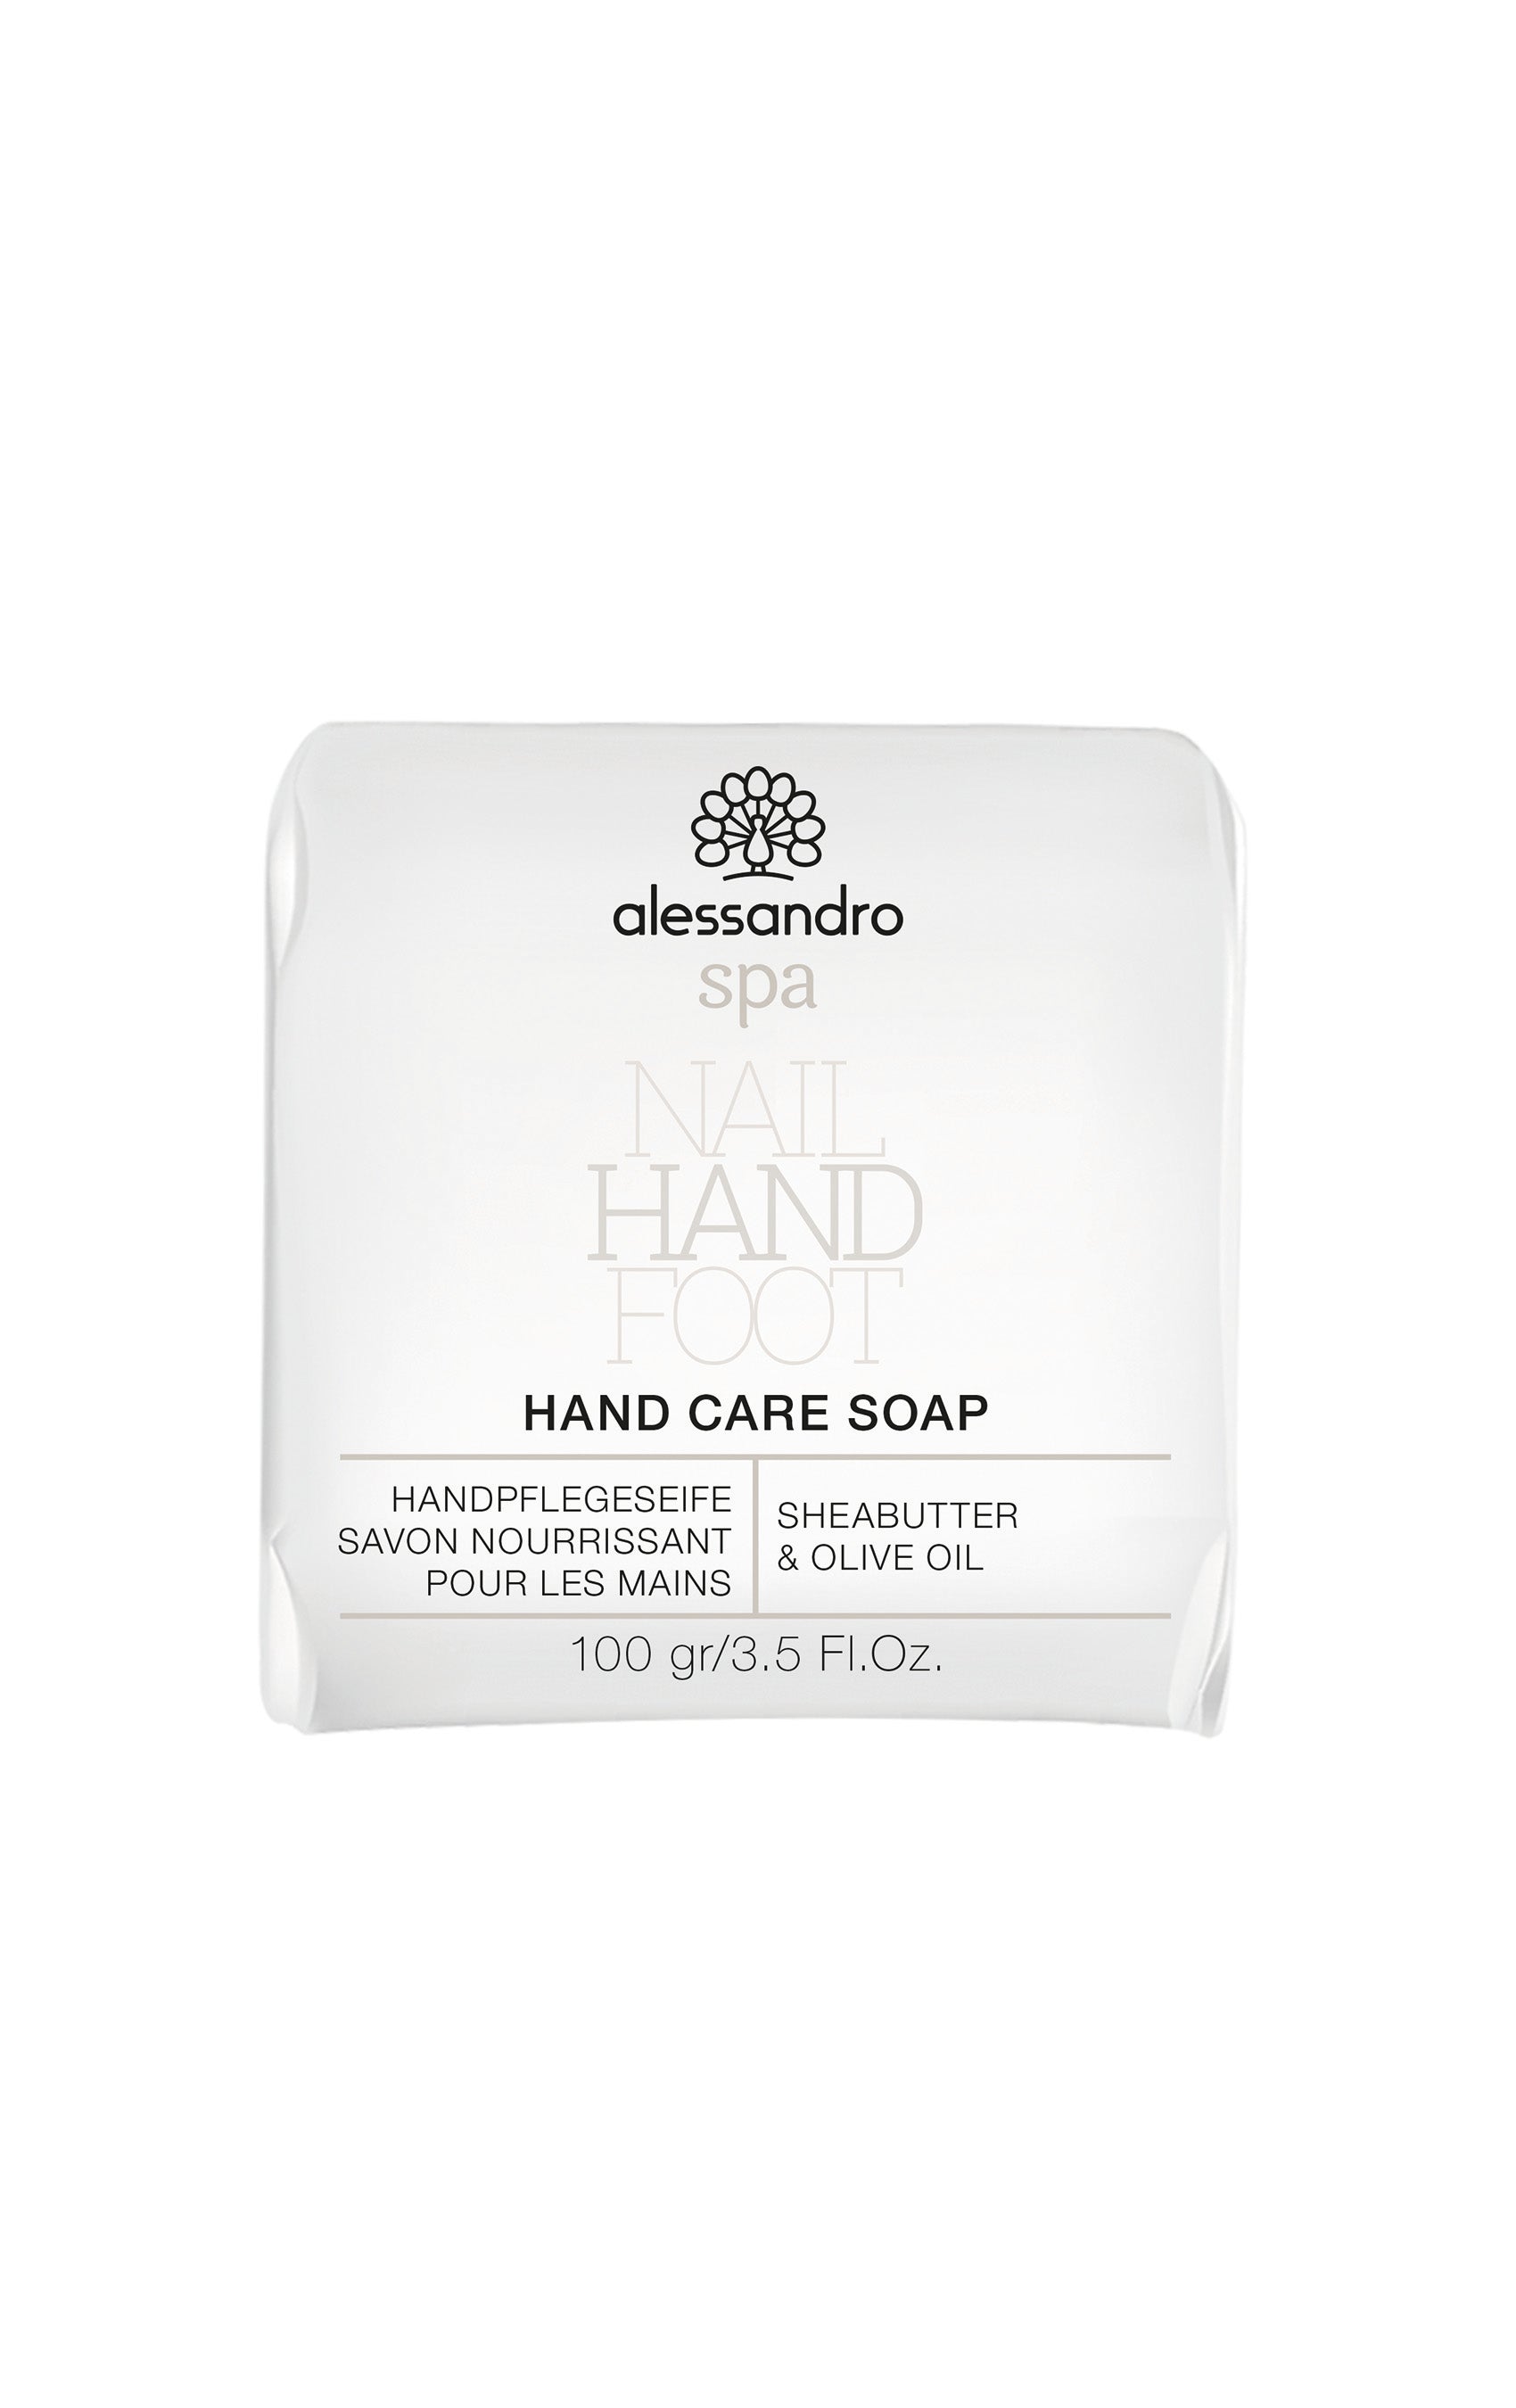 HAND CARE - alessandro Hand Spa – Baltic Cosmetics